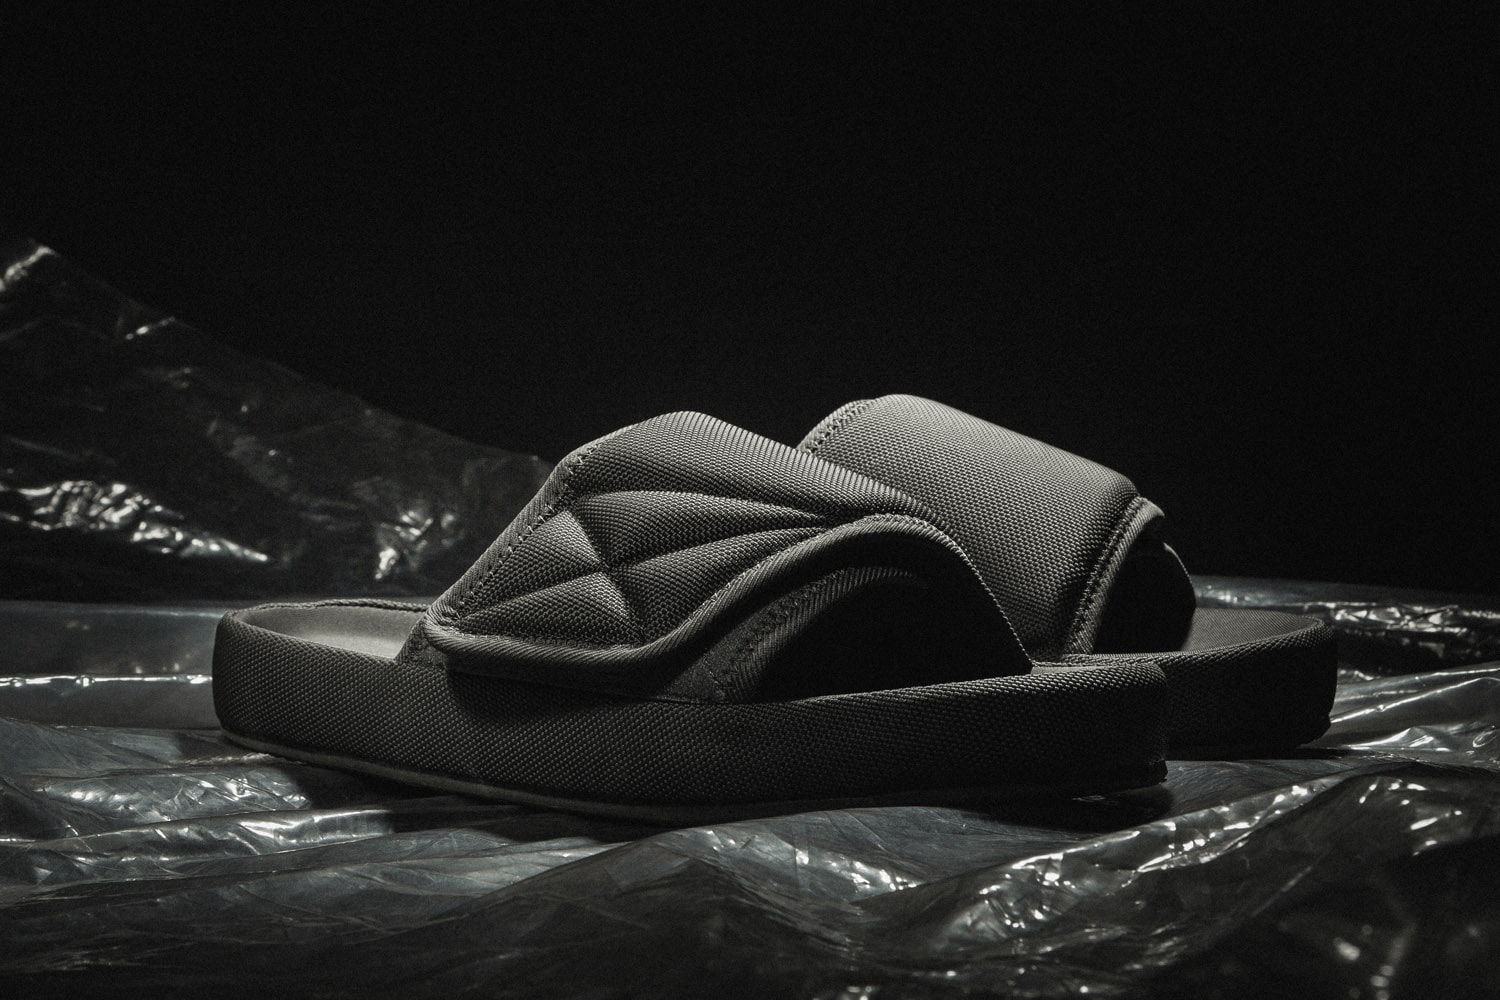 YEEZY Season 6 Closer Look Calabasas Collection Kanye West Desert Rat Boot Graphite Suede Taupe Sandals Slides